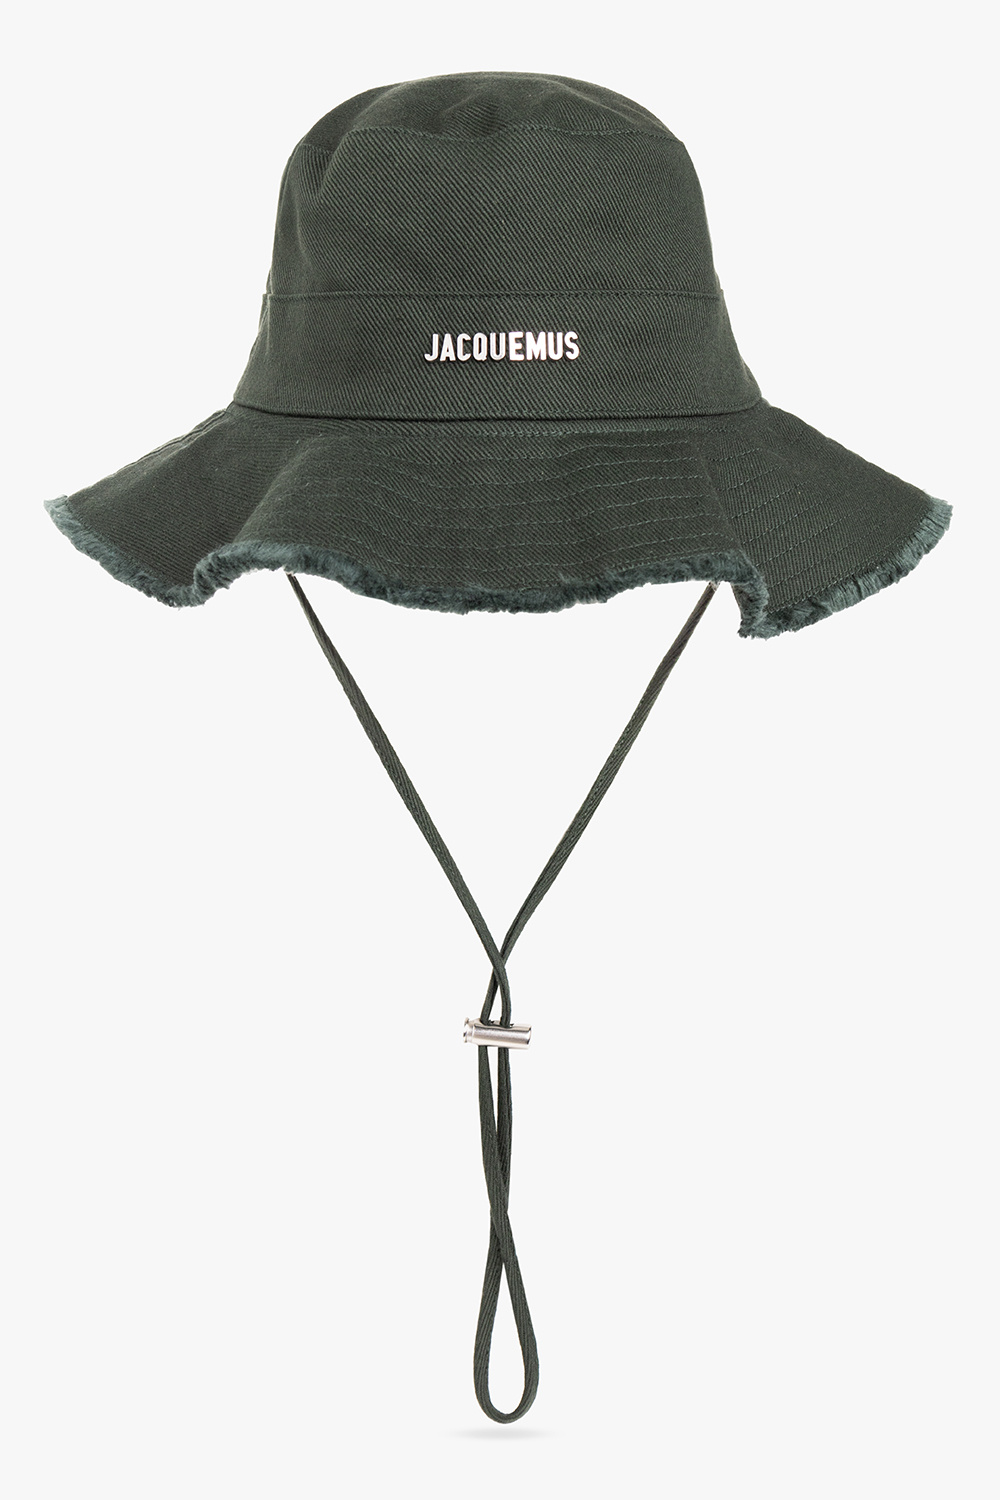 Jacquemus ‘Artichaut’ hat